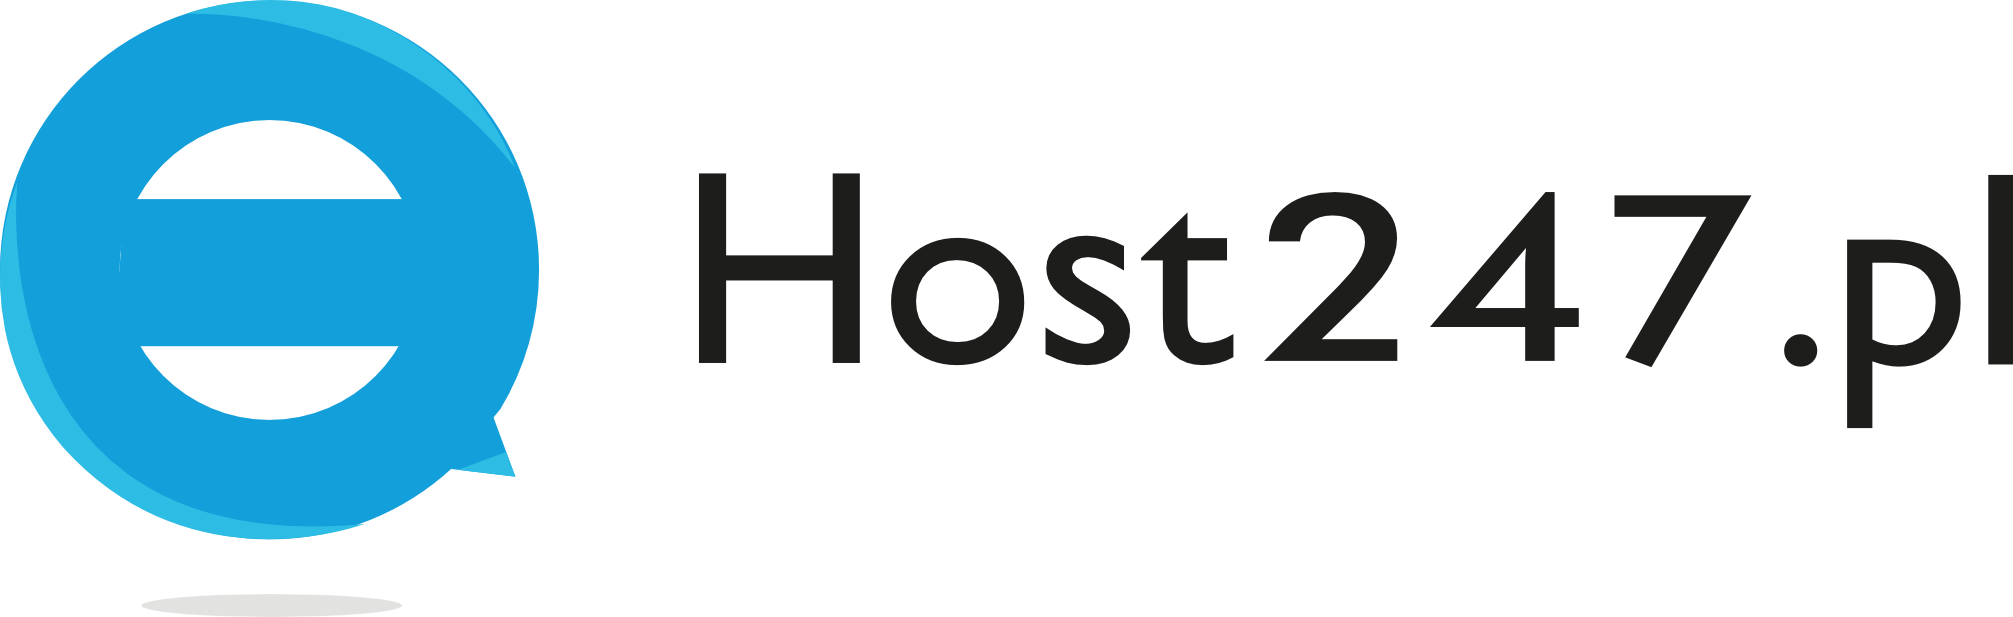 Host247.pl